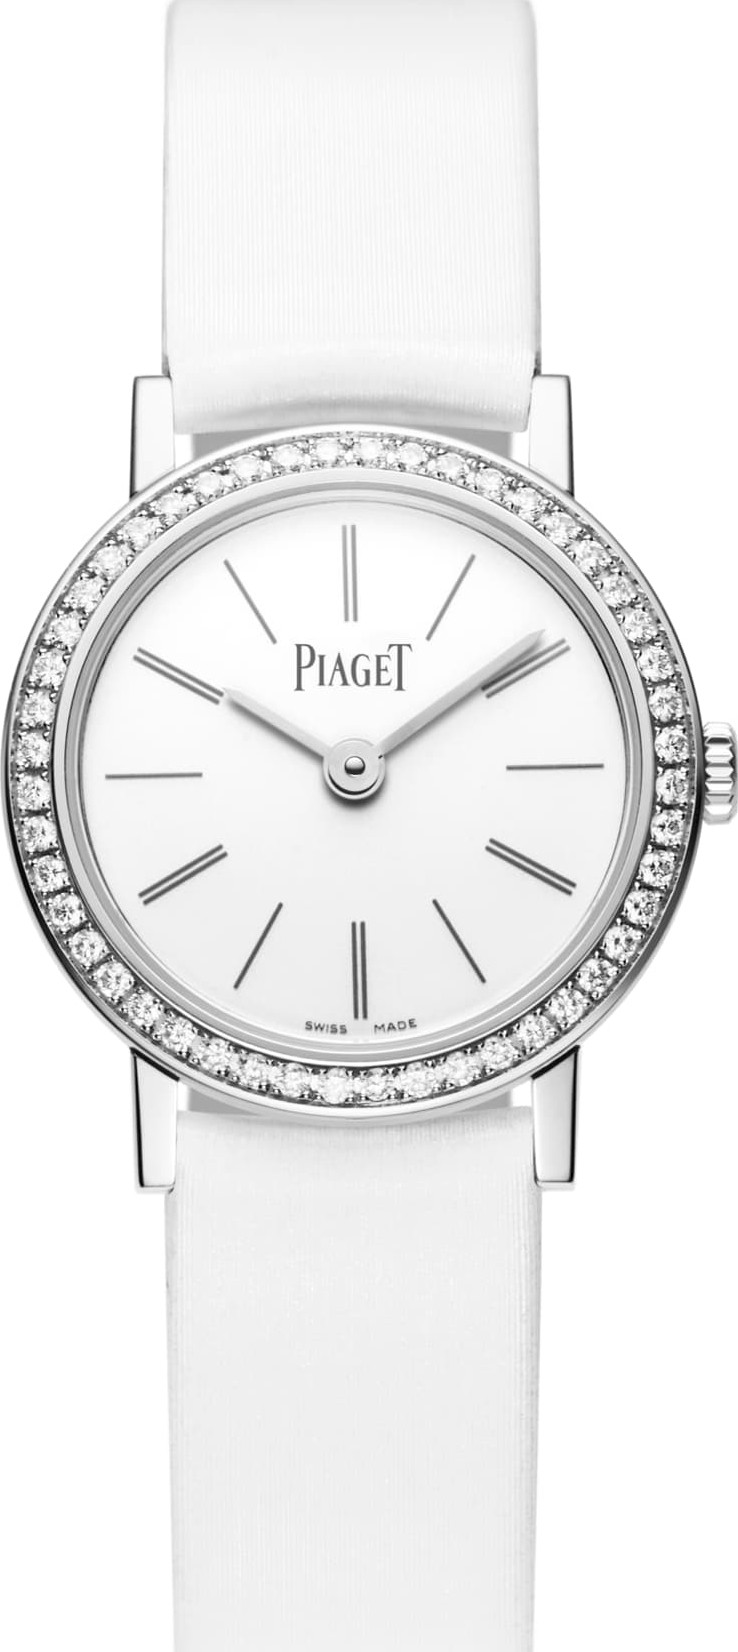 piaget-g0a44532-altiplano-origin-watch-24mm